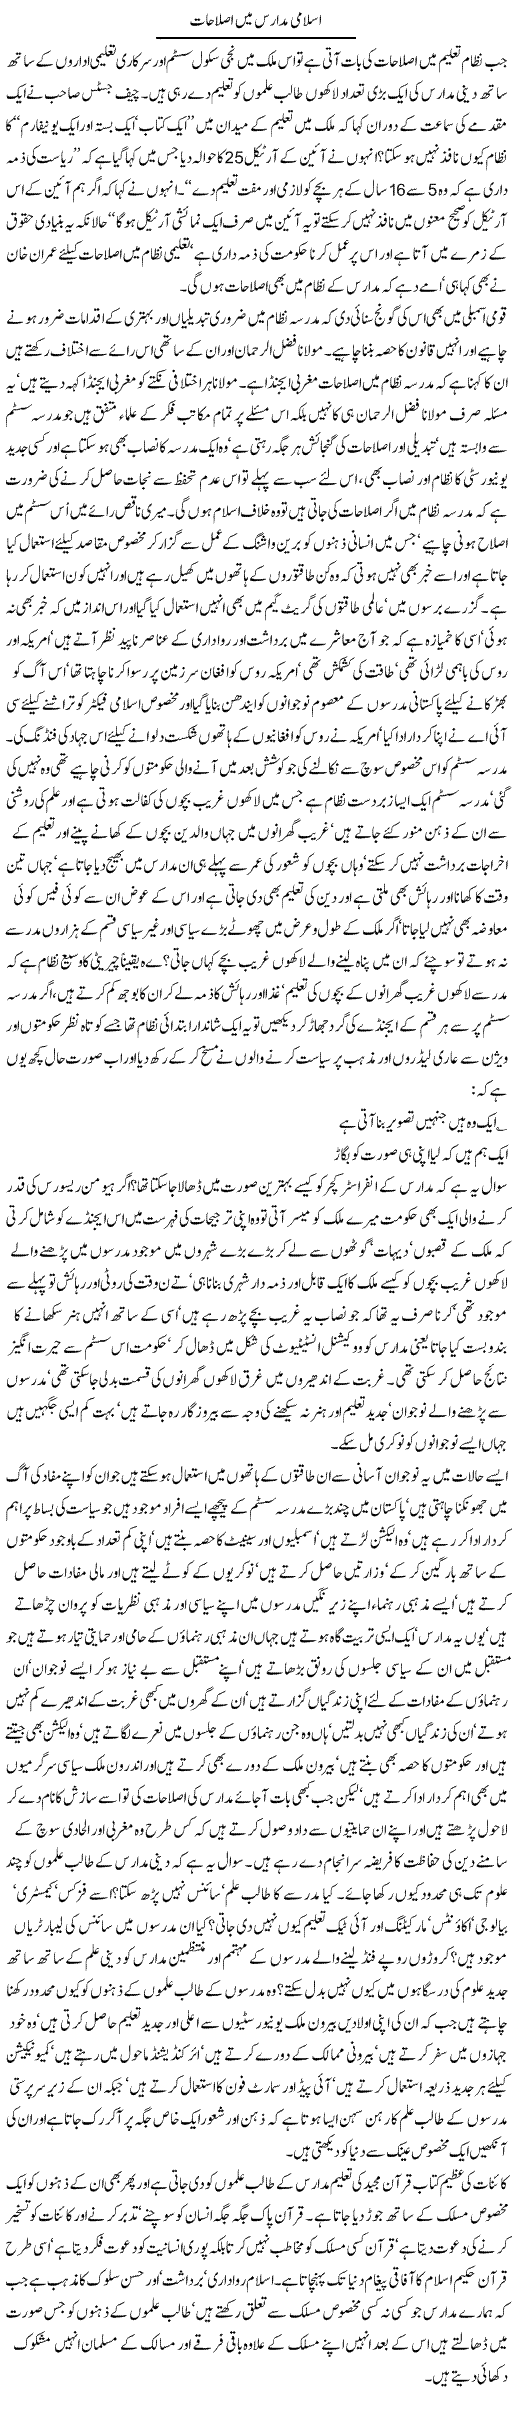 Islami Madaris Mein Islahat | Jamil Marghuz | Daily Urdu Columns